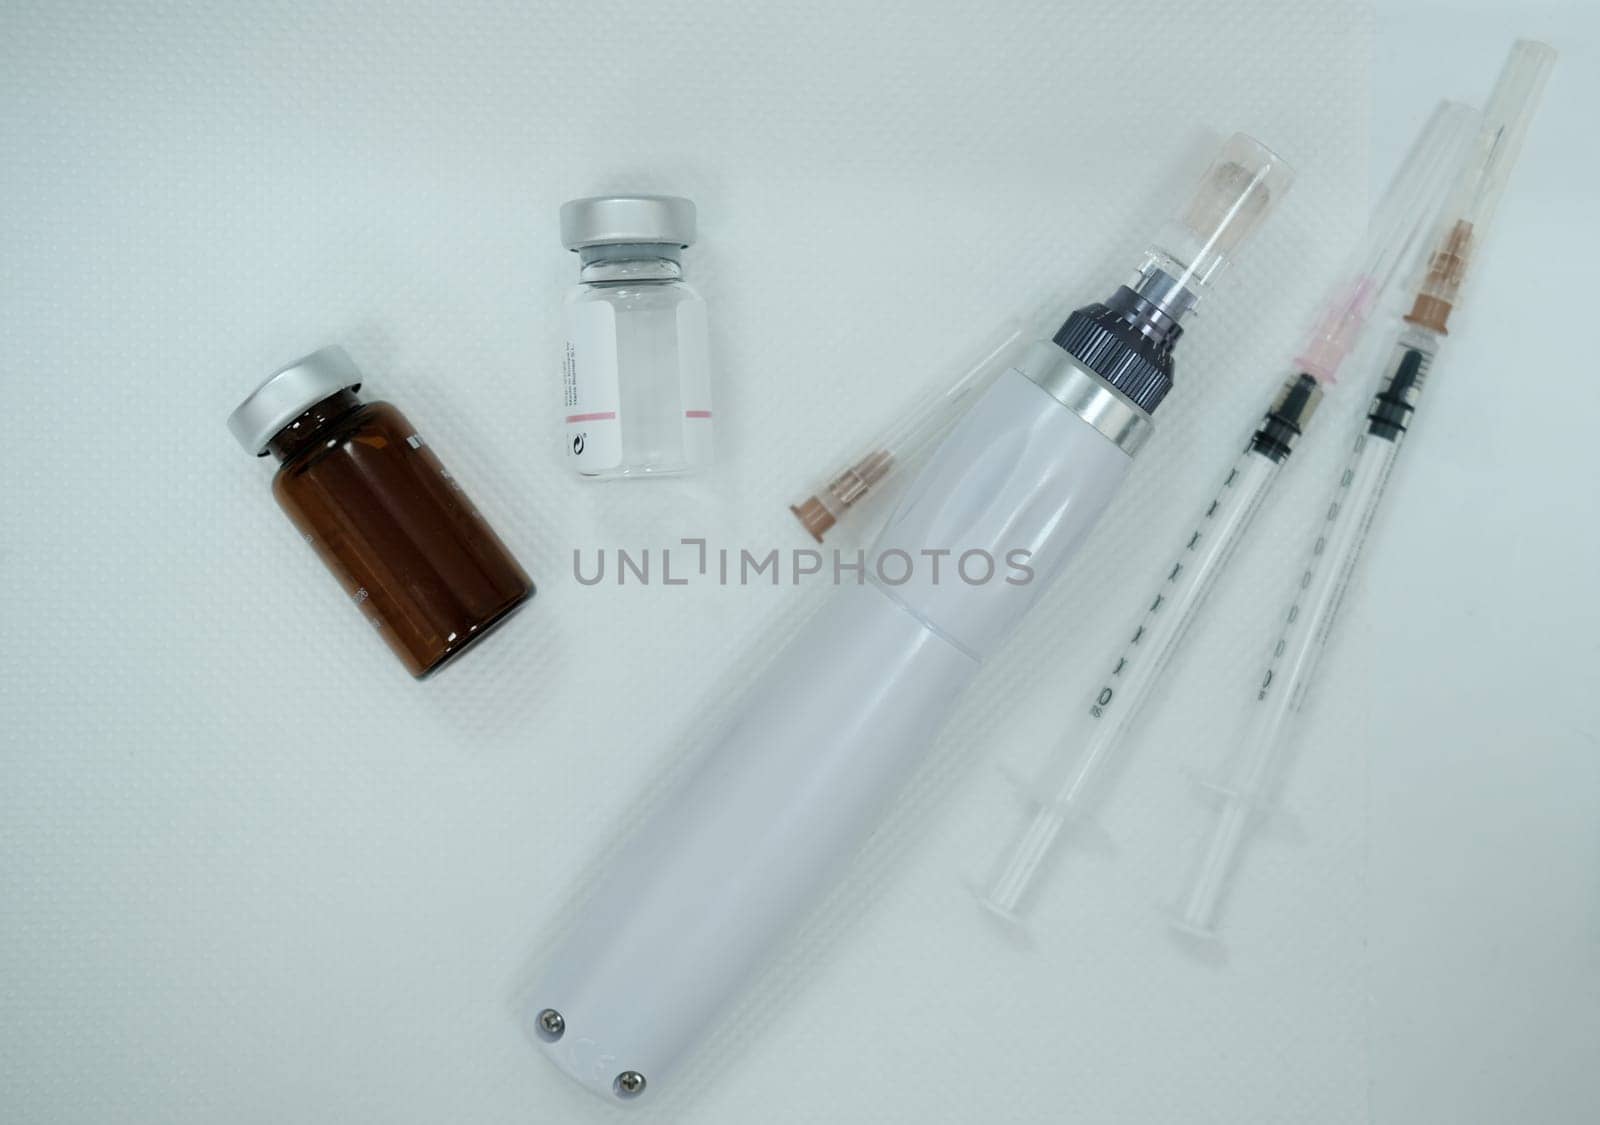 Equipment after microneedling procedure. Syringes. Serum bottle. Dermapen device. Microneedling device